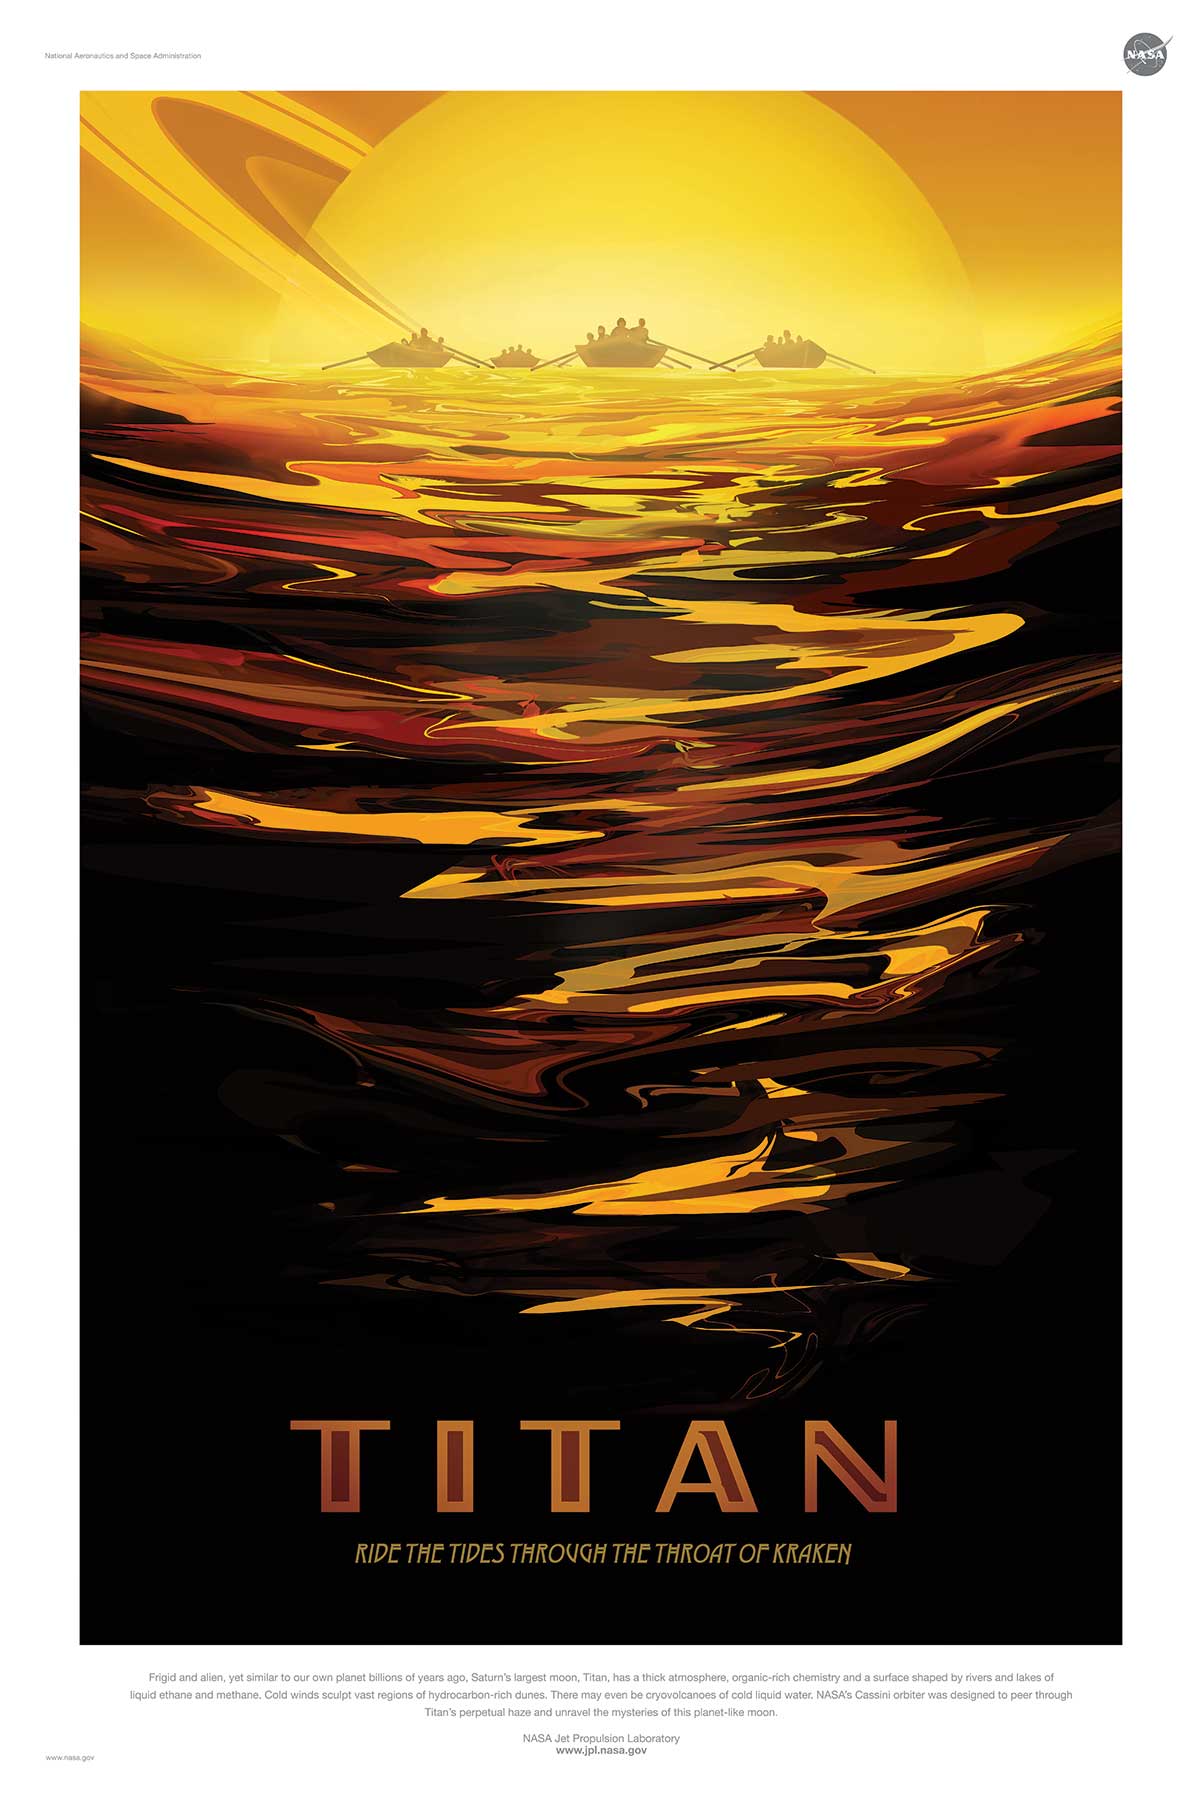 NASA poster promoting space travel to Titan